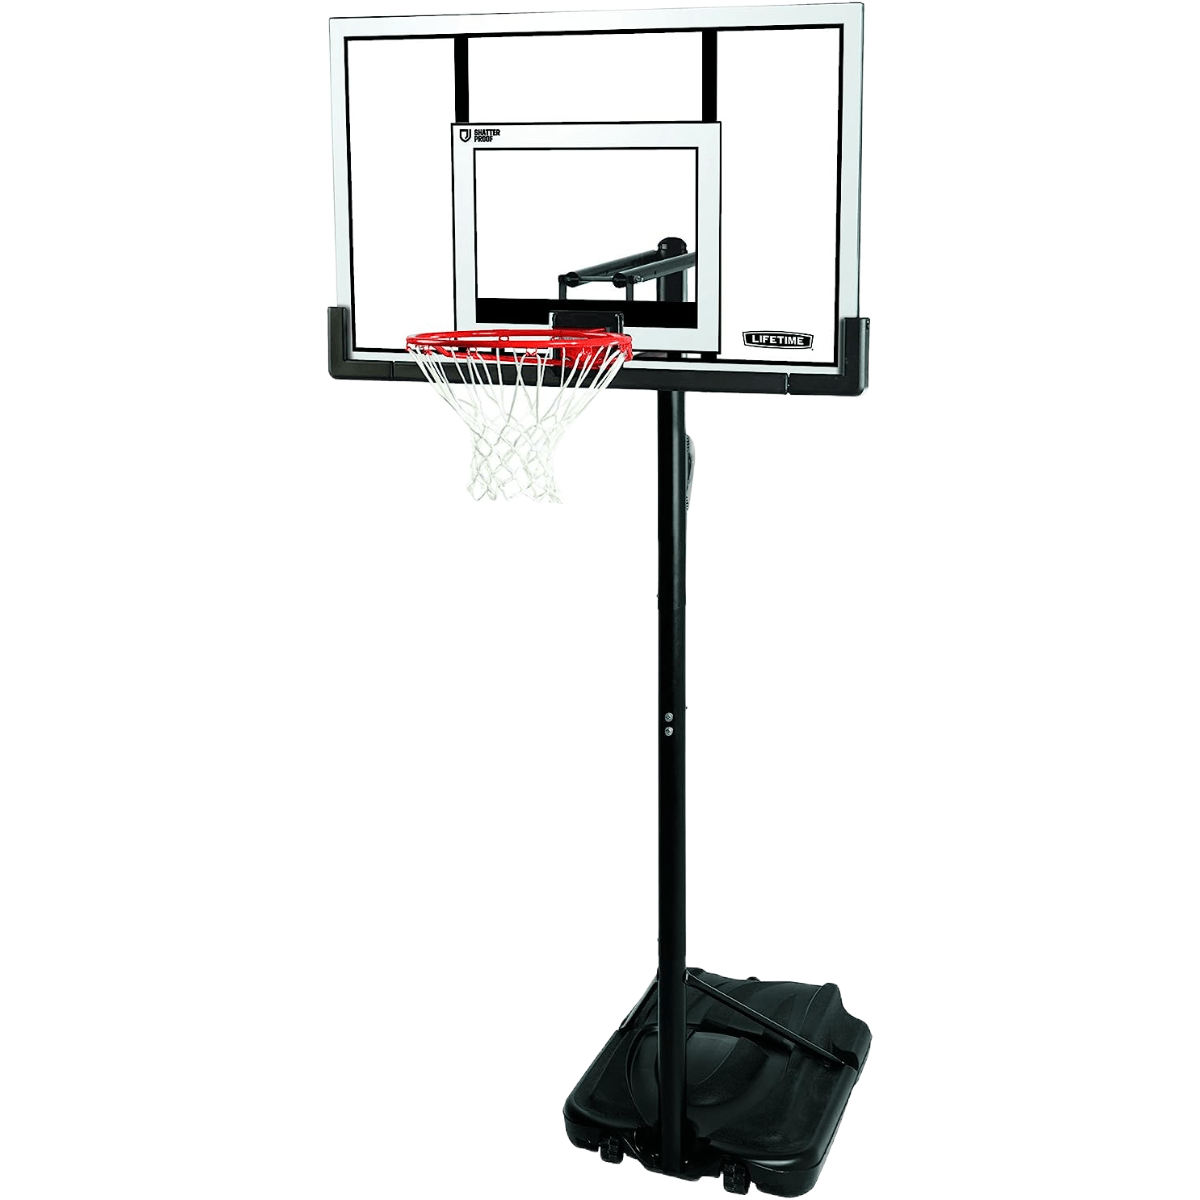 Height Adjustable Basketball Backboard Frame - Grand Slam Sports